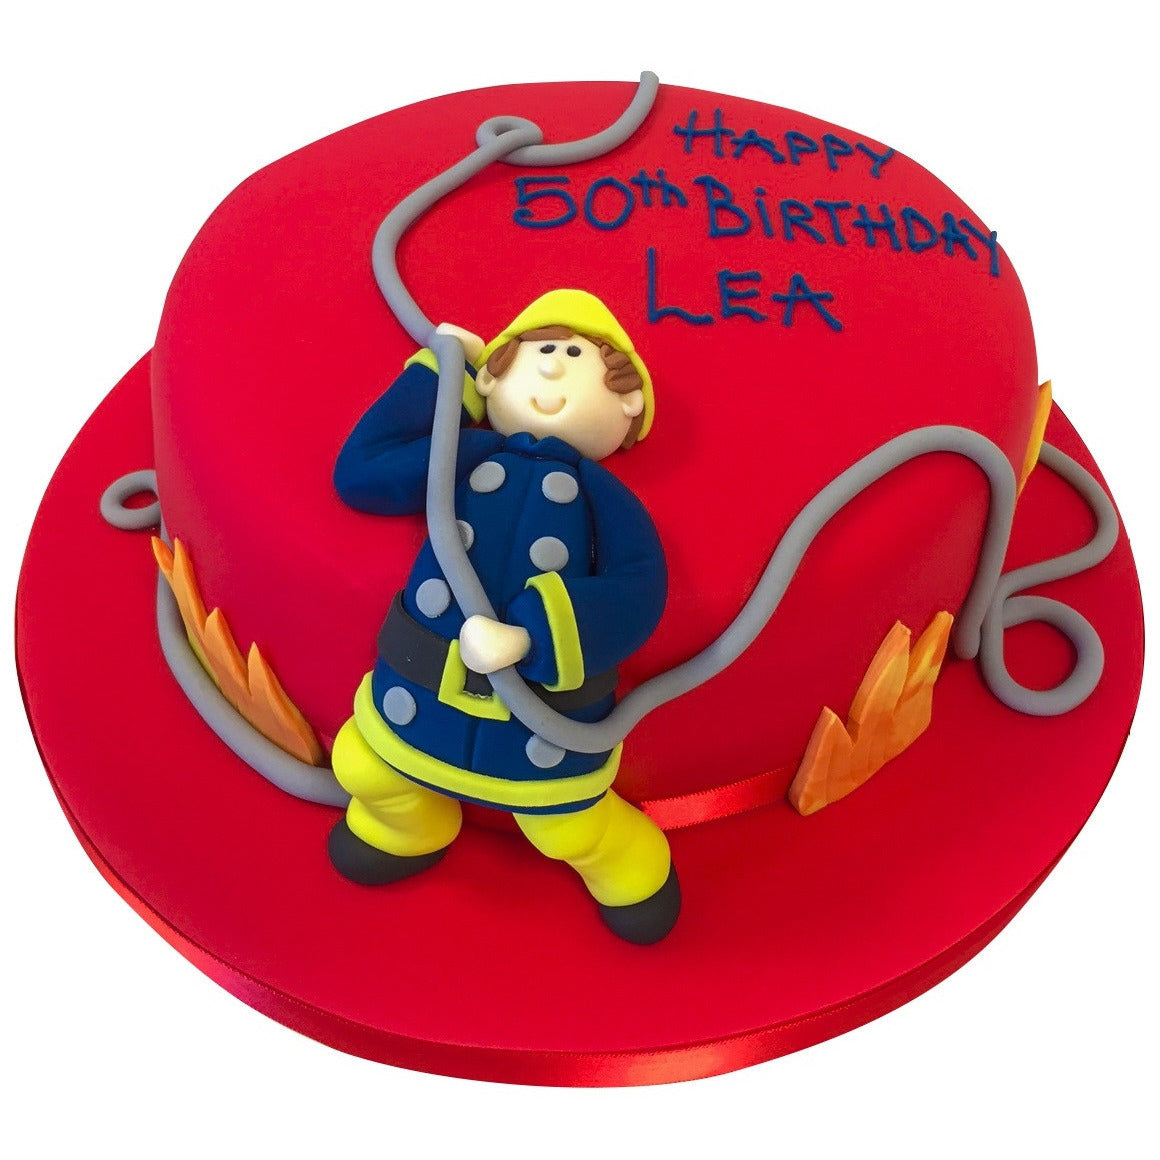 Fireman Sam (Approx 6” Tall) Edible Handmade Birthday Cake Topper Set(4  Pieces) | eBay